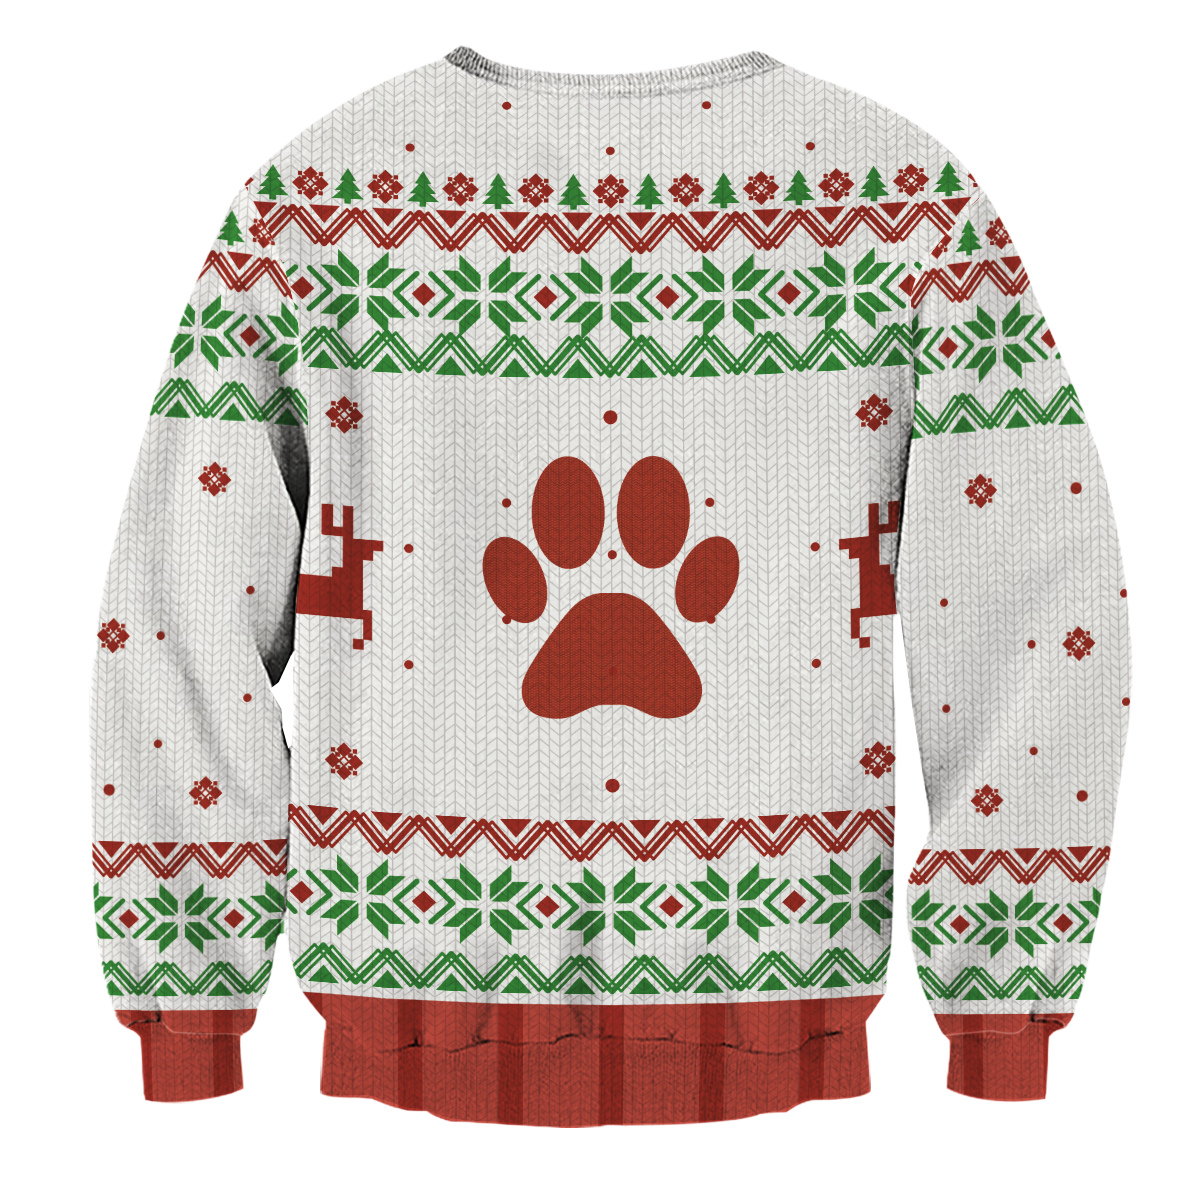 Merry Woofmas Unisex Sweater